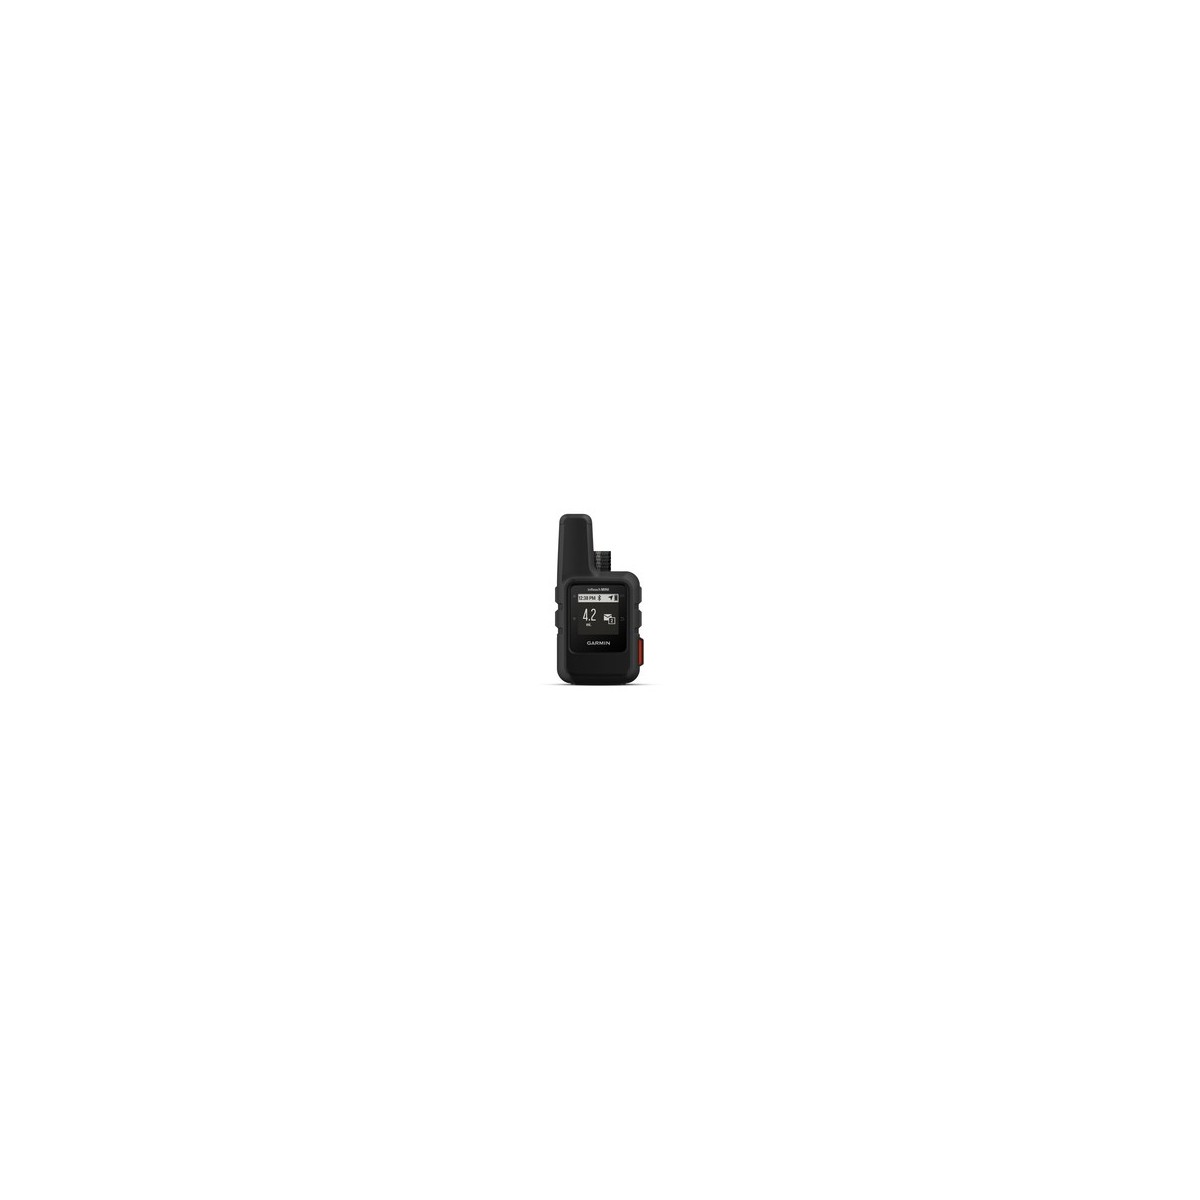 Garmin inReach Mini - 23 x 23 mm - 128 x 128 pixels - Monochrome - Micro-USB - Rechargeable - 90 h